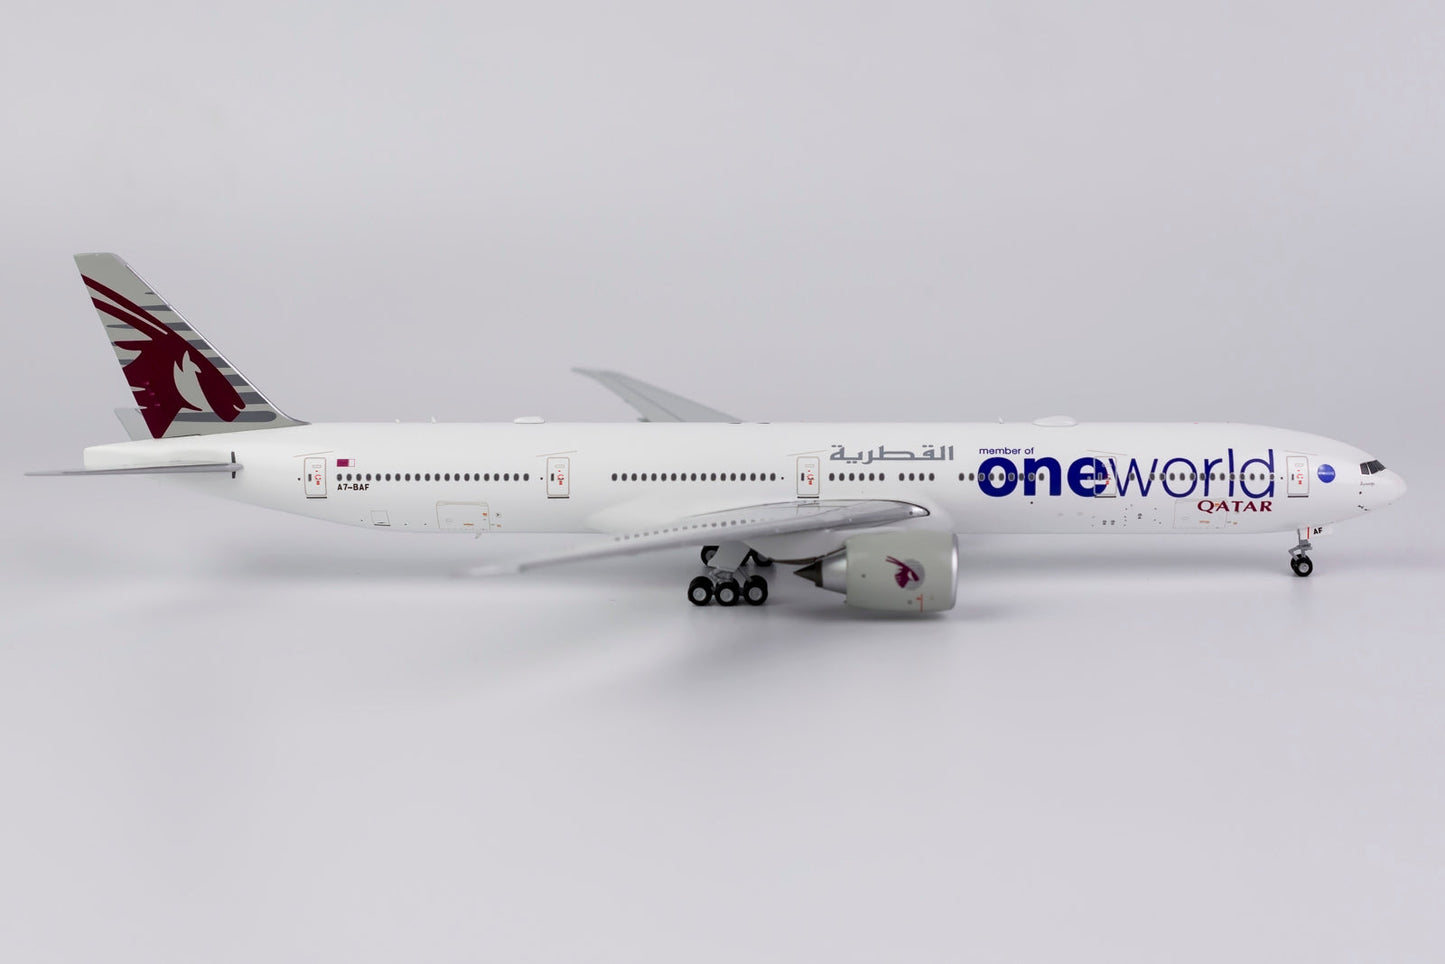 1/400 Qatar Airways B 777-300ER "Oneworld" NG Models 73013